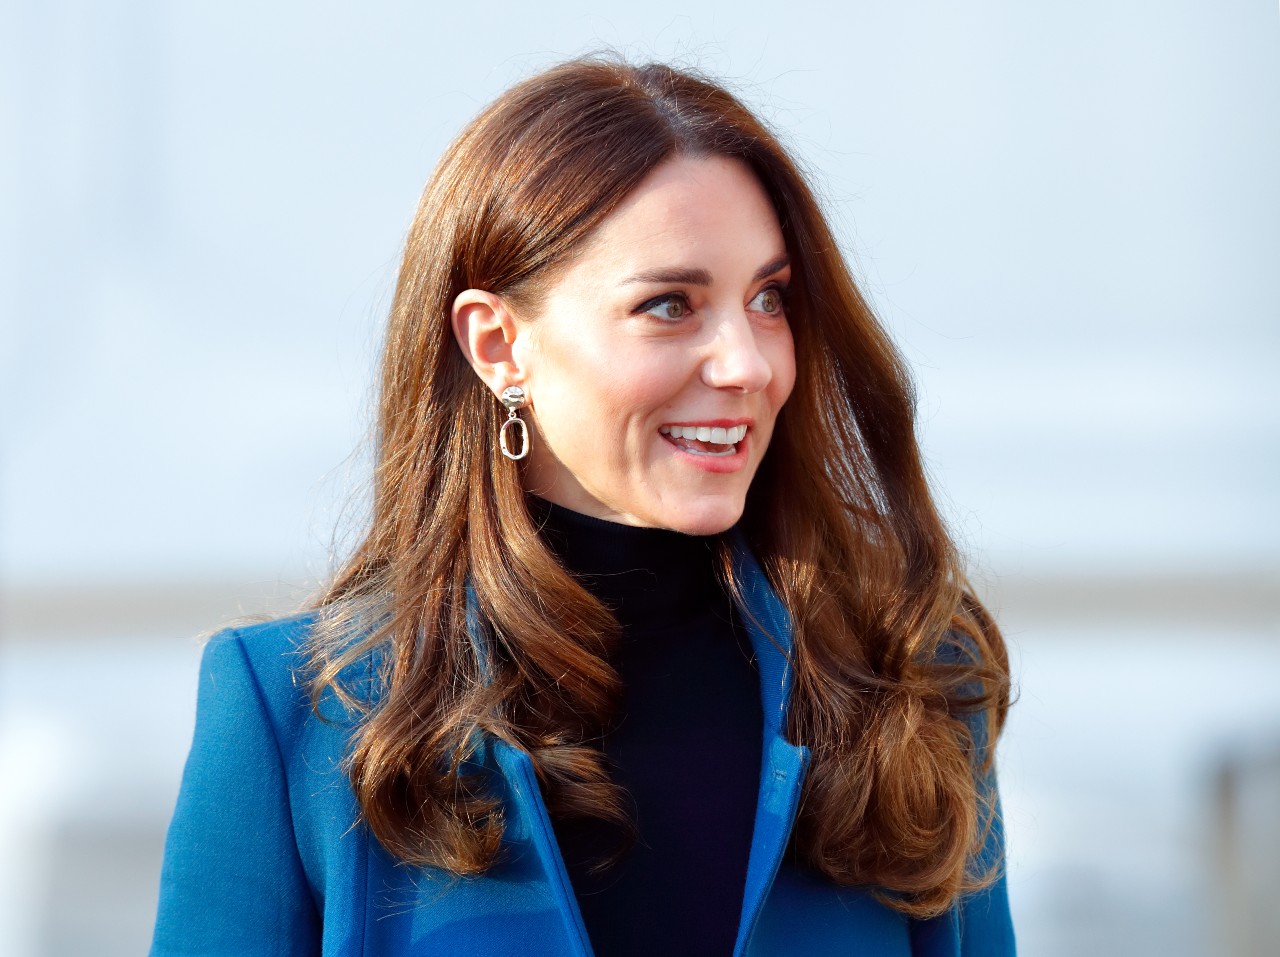 Kate Middleton poses in a royal blue blazer.